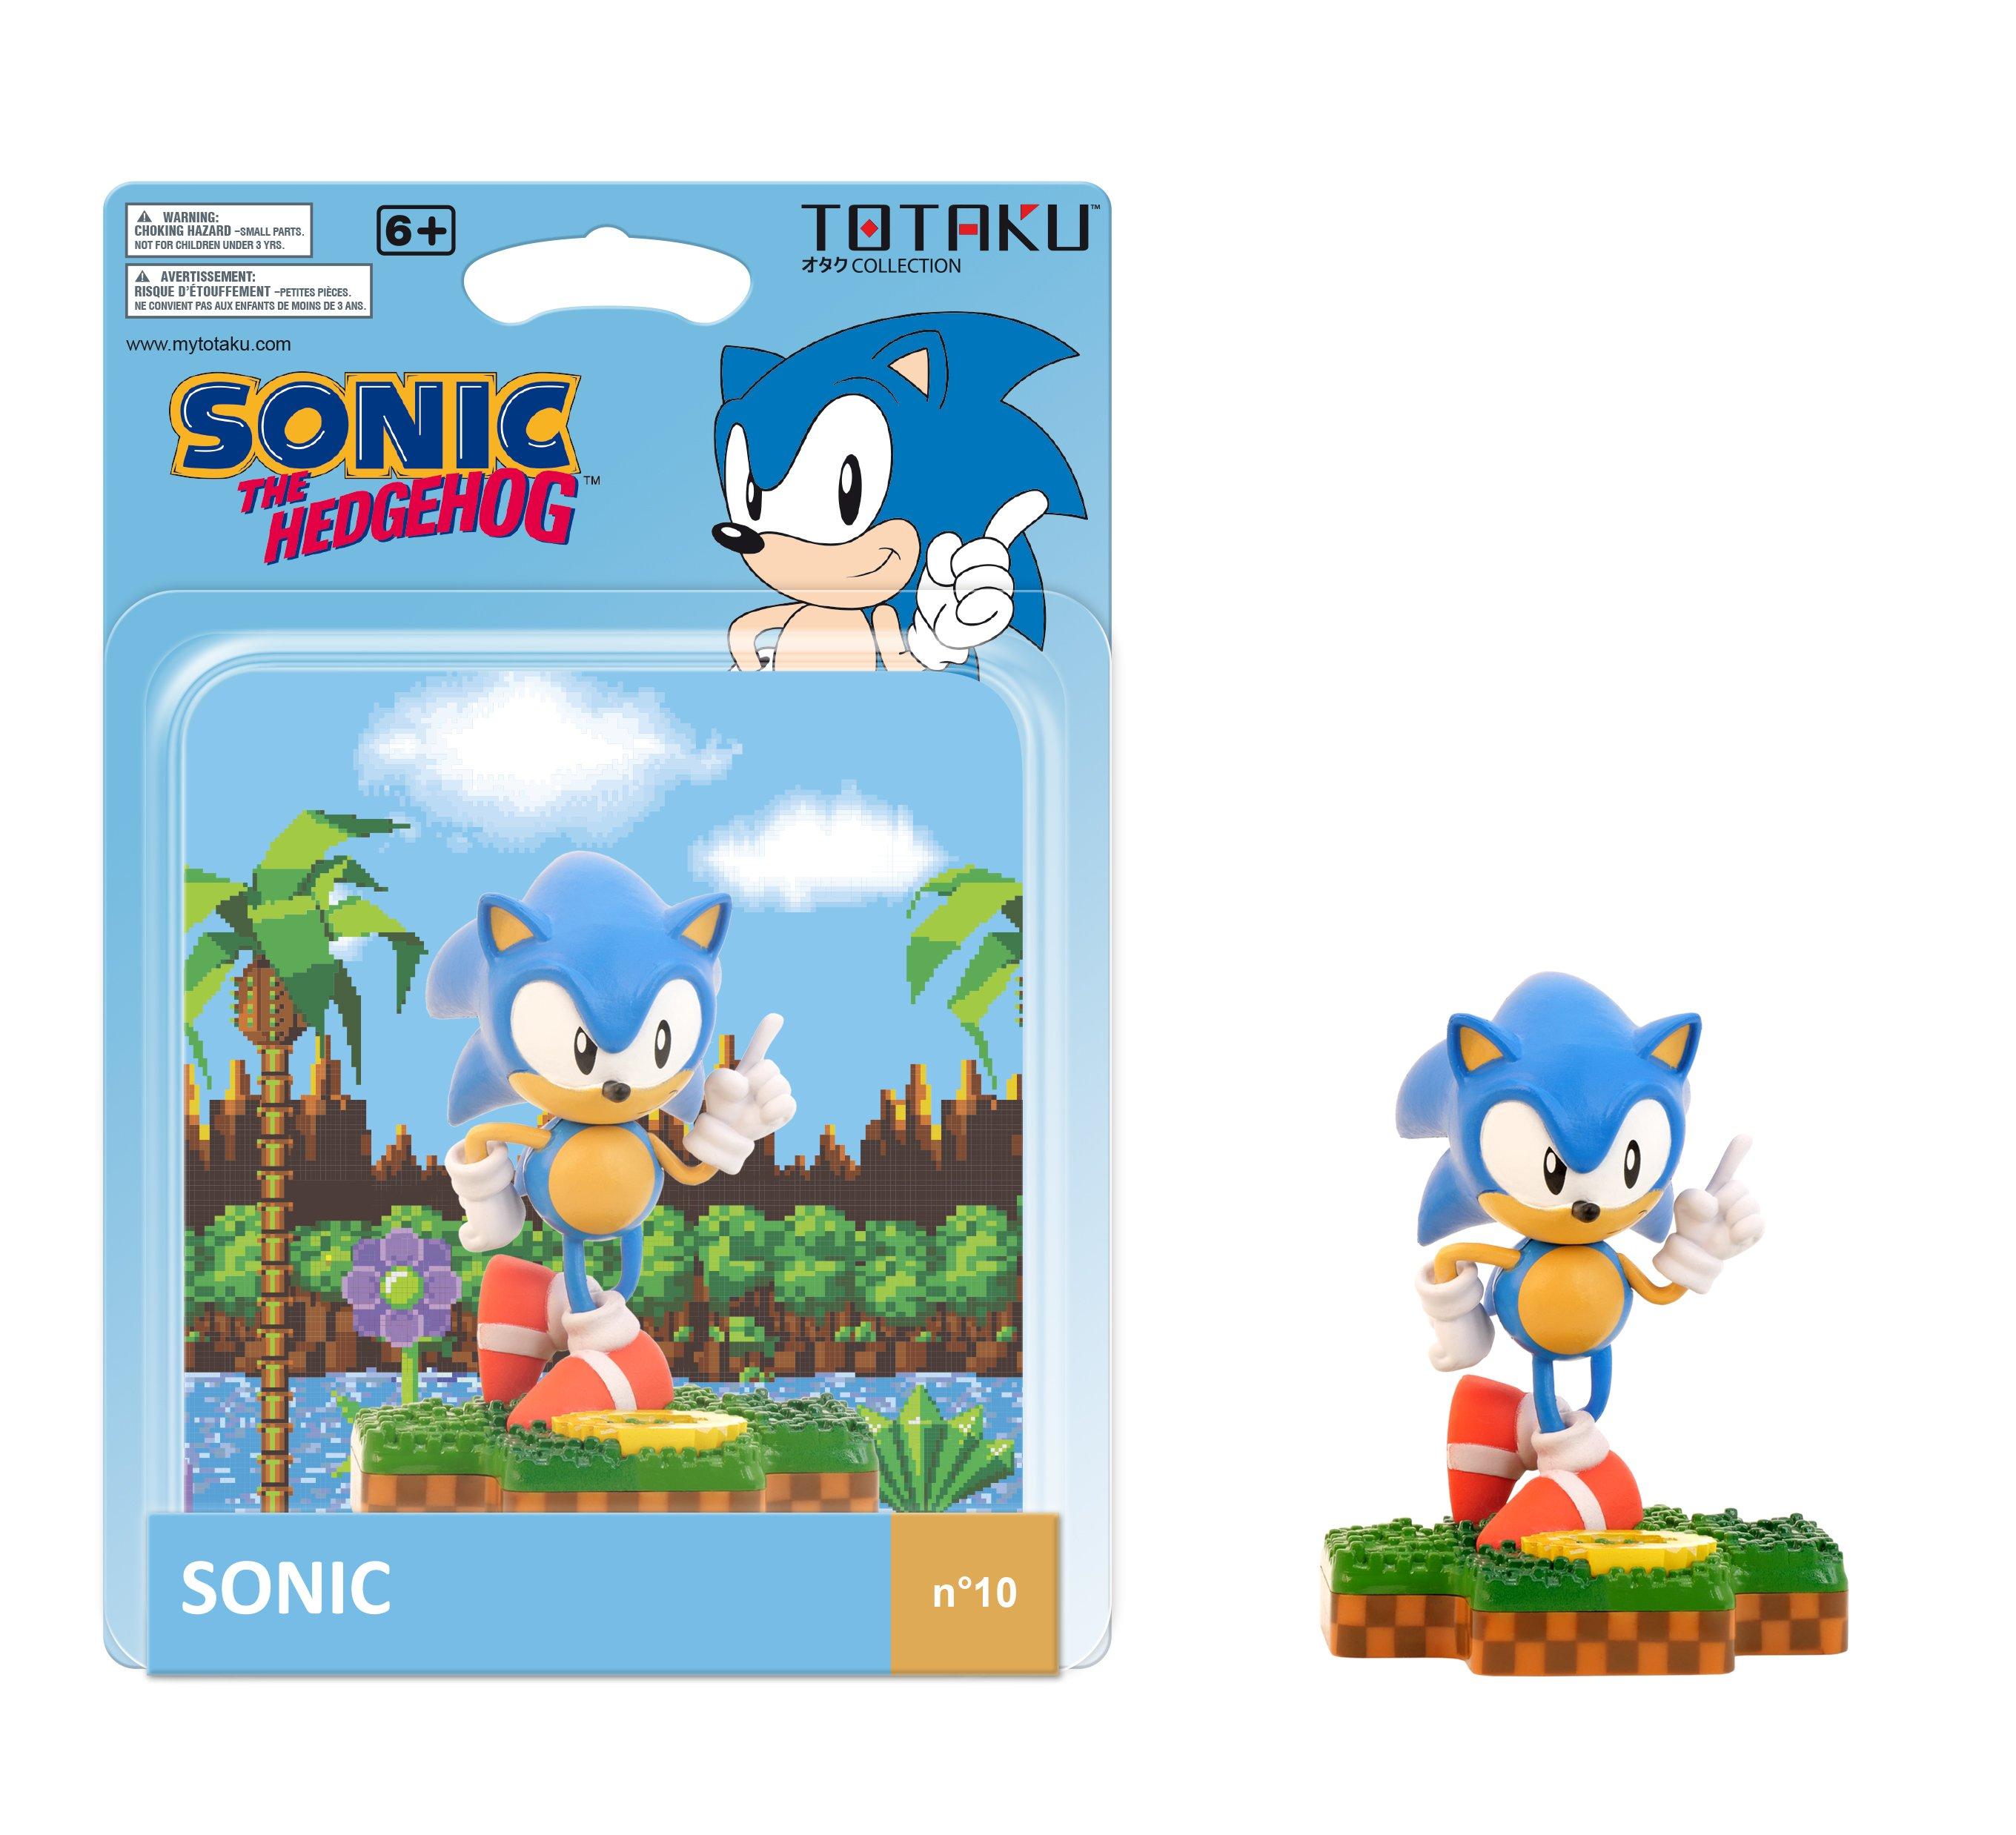 Sonic The Hedgehog Totaku Collection Figure Only At Gamestop Gamestop